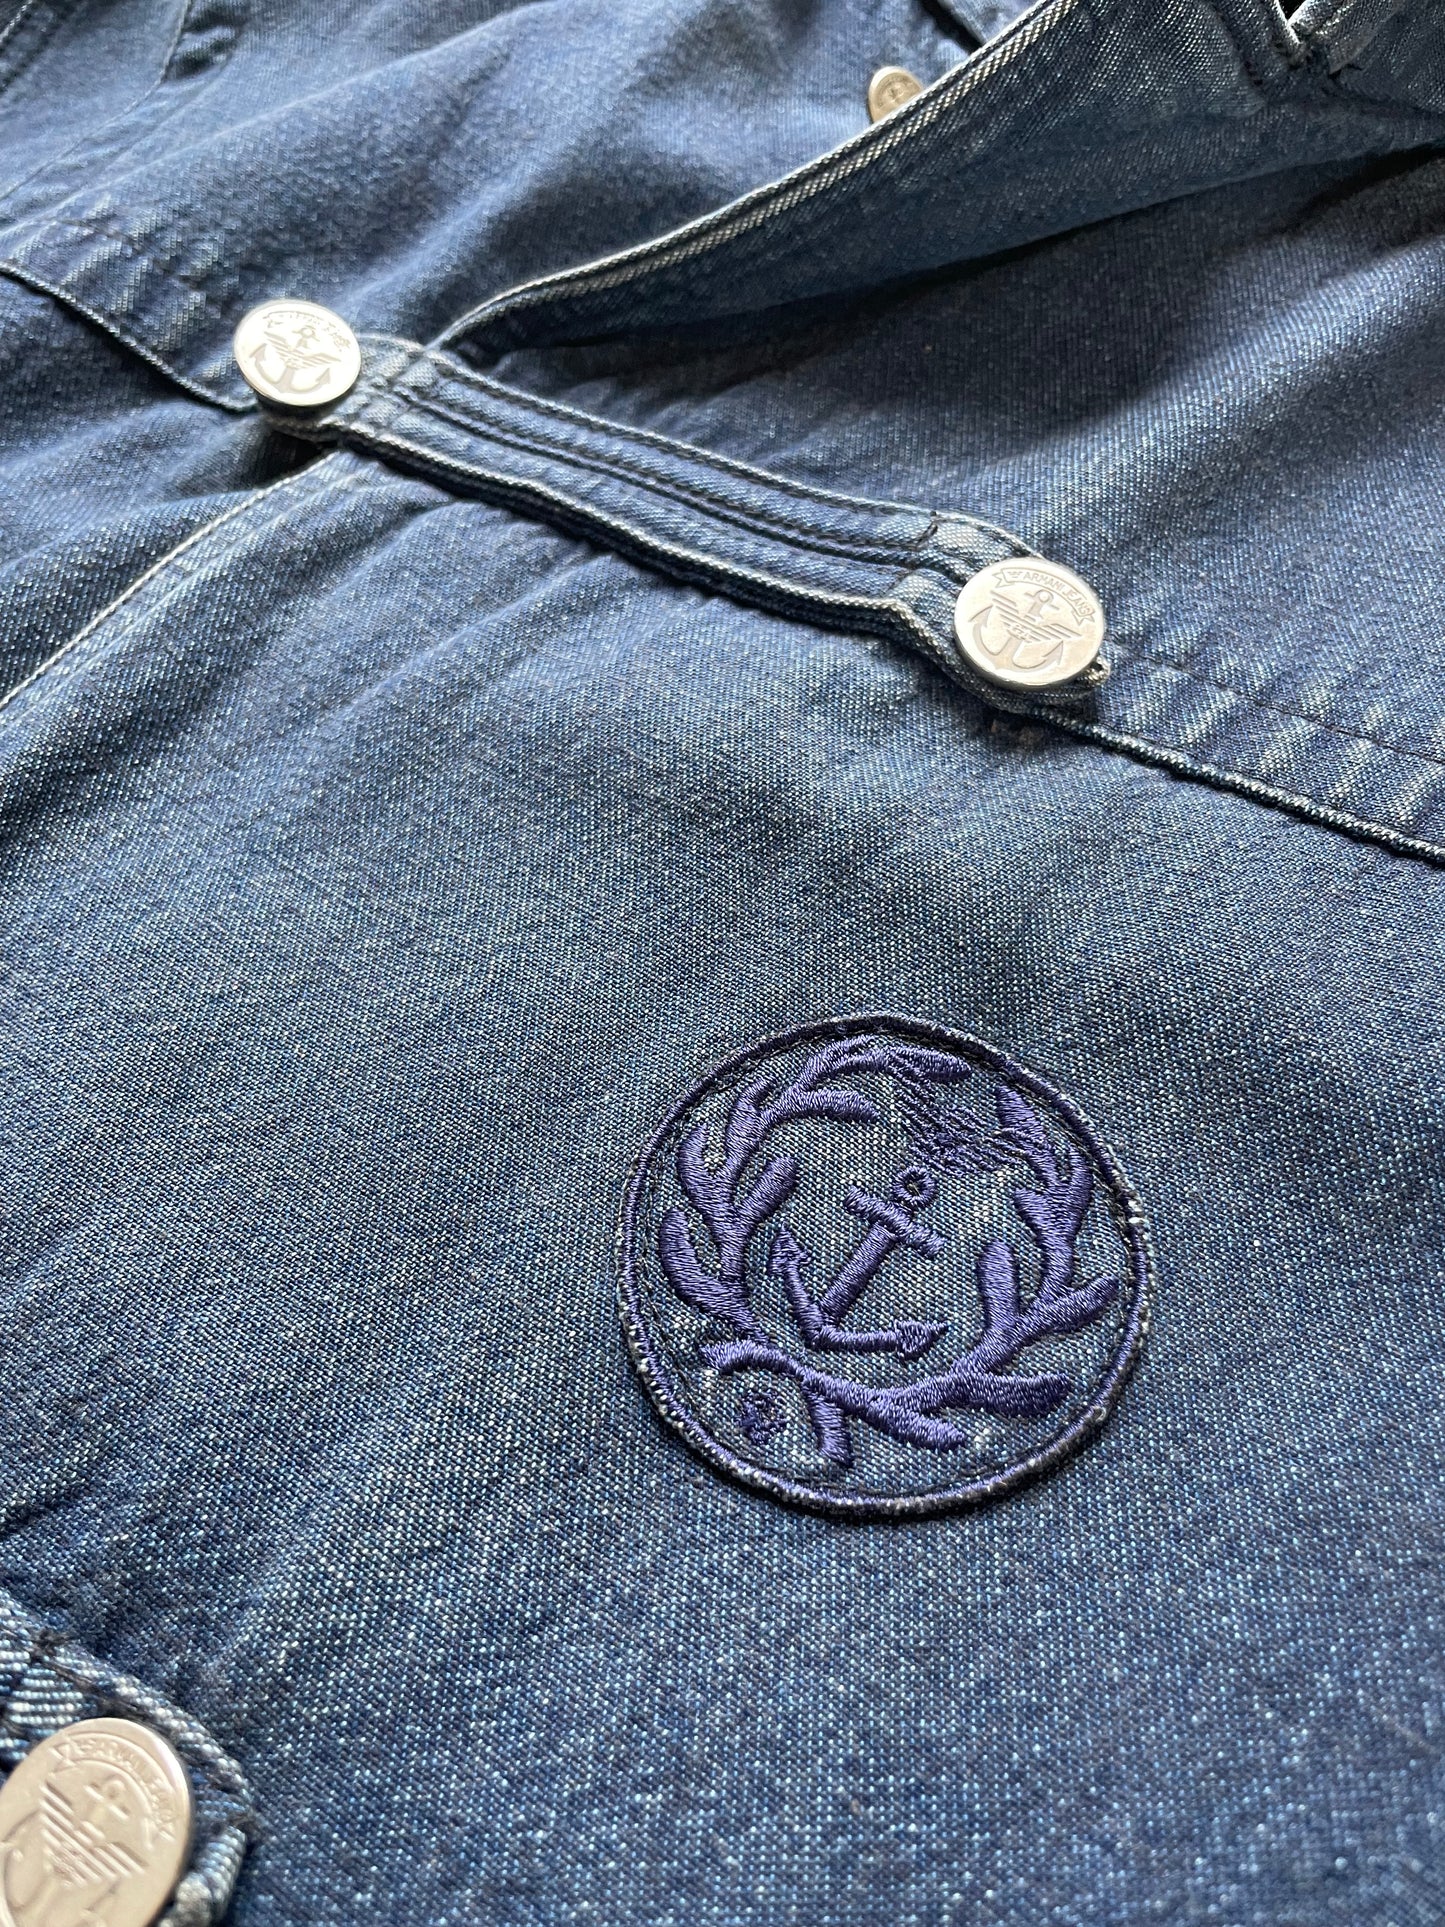 Early 90s Armani Jeans denim shawl collar duffle jacket (size 50)